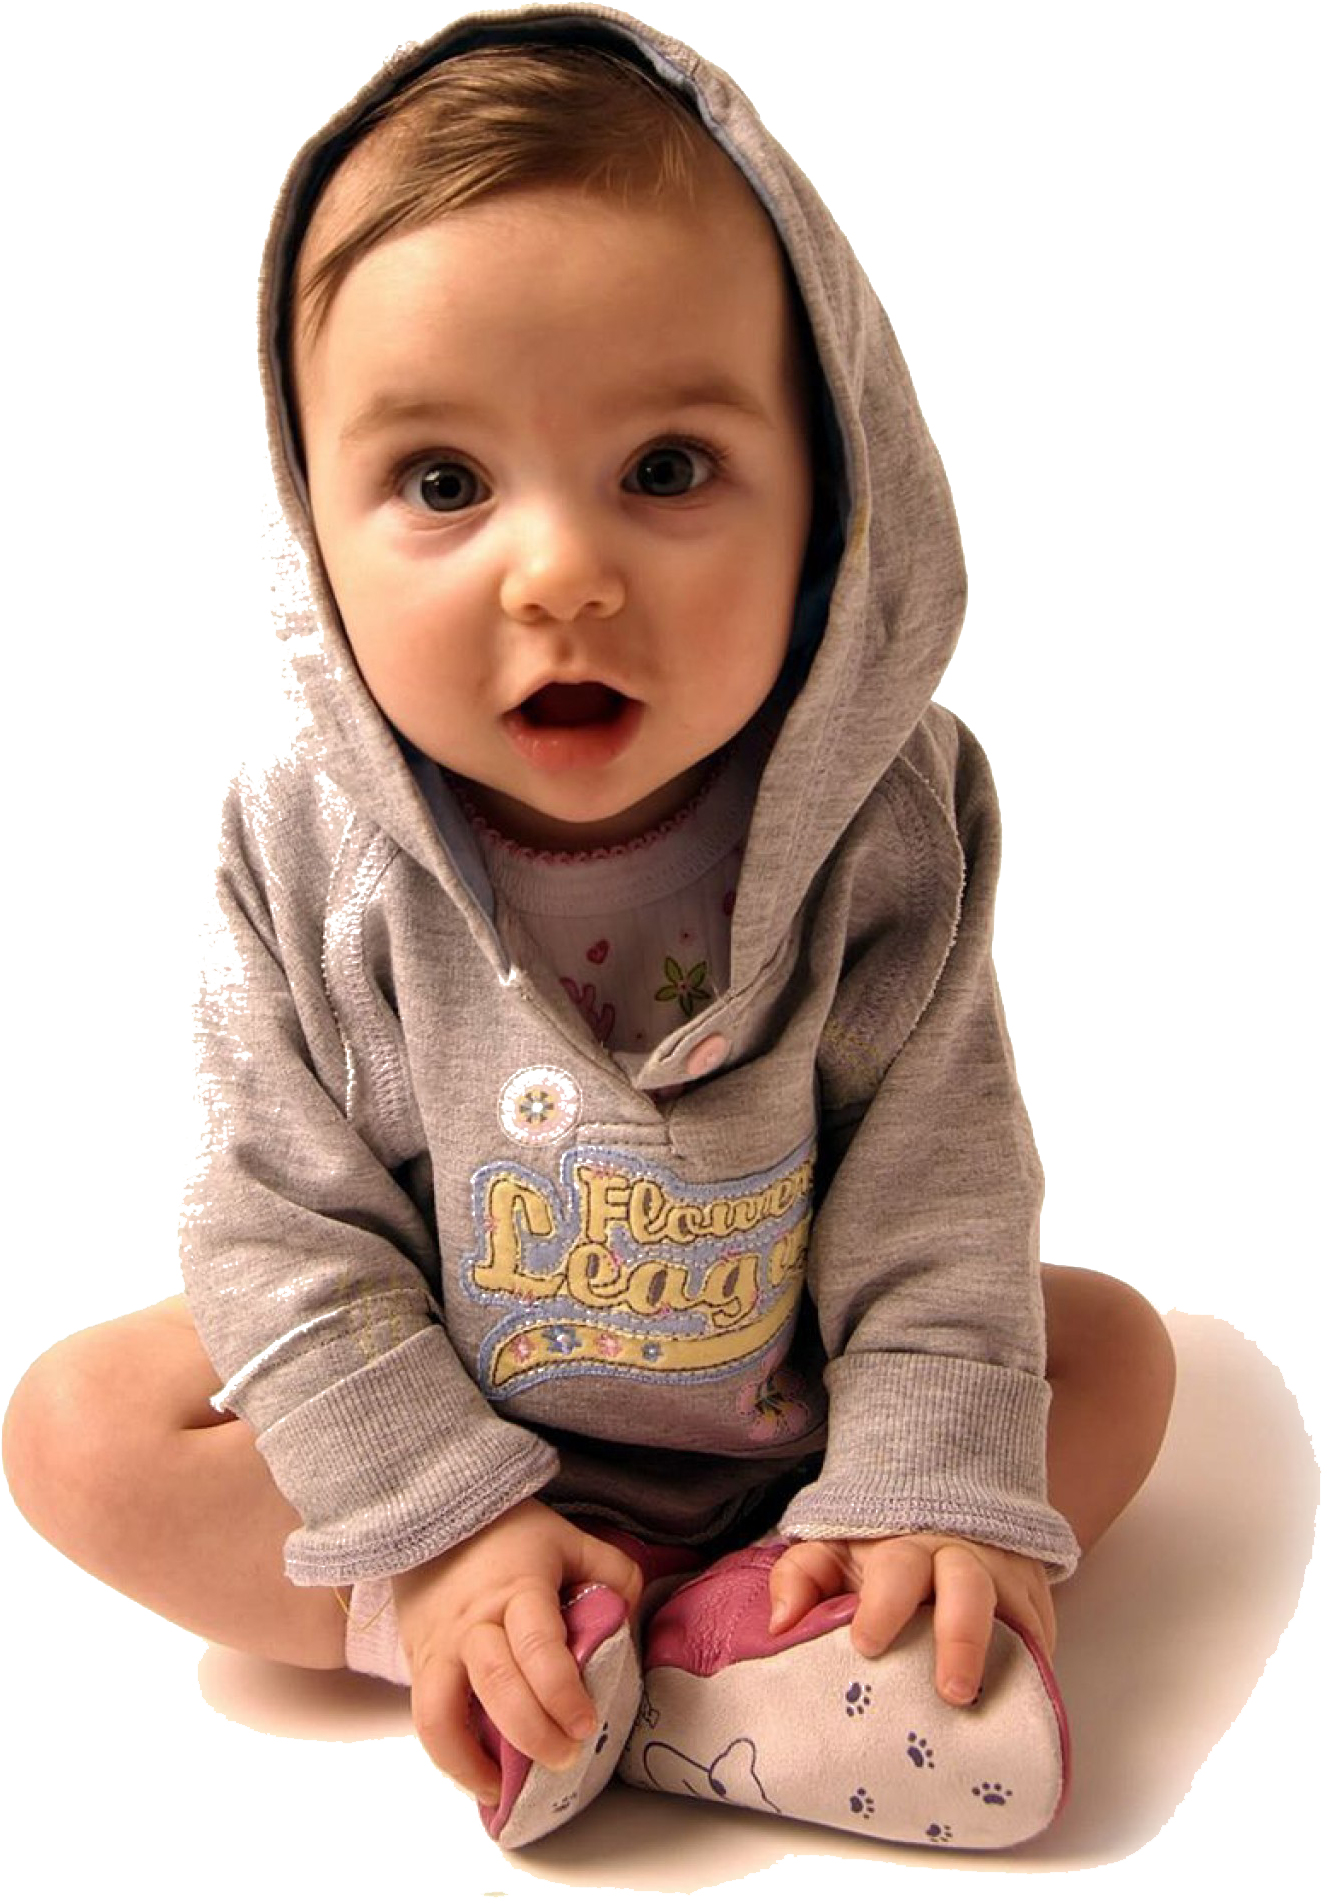 Infant Child Boy Cuteness Samsung Galaxy S5 - Hispanic White Baby Boy (2048x2048)